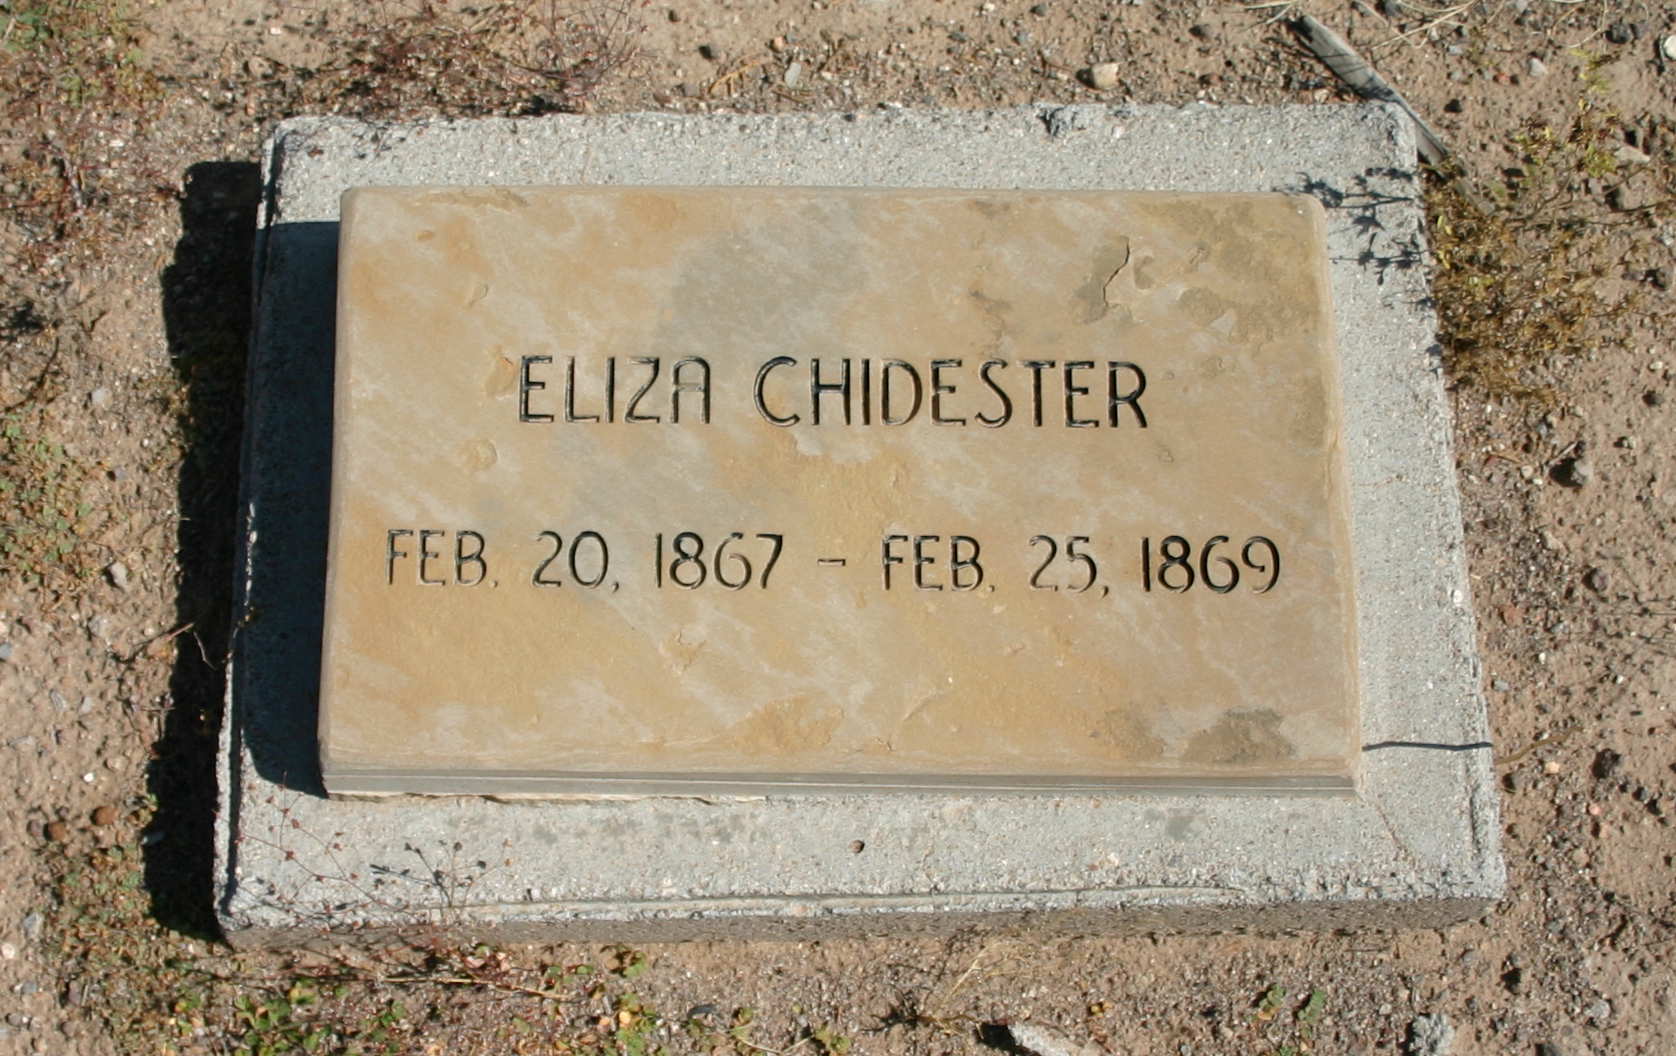 Eliza Chidester gravestone at the Hebron Cemetery